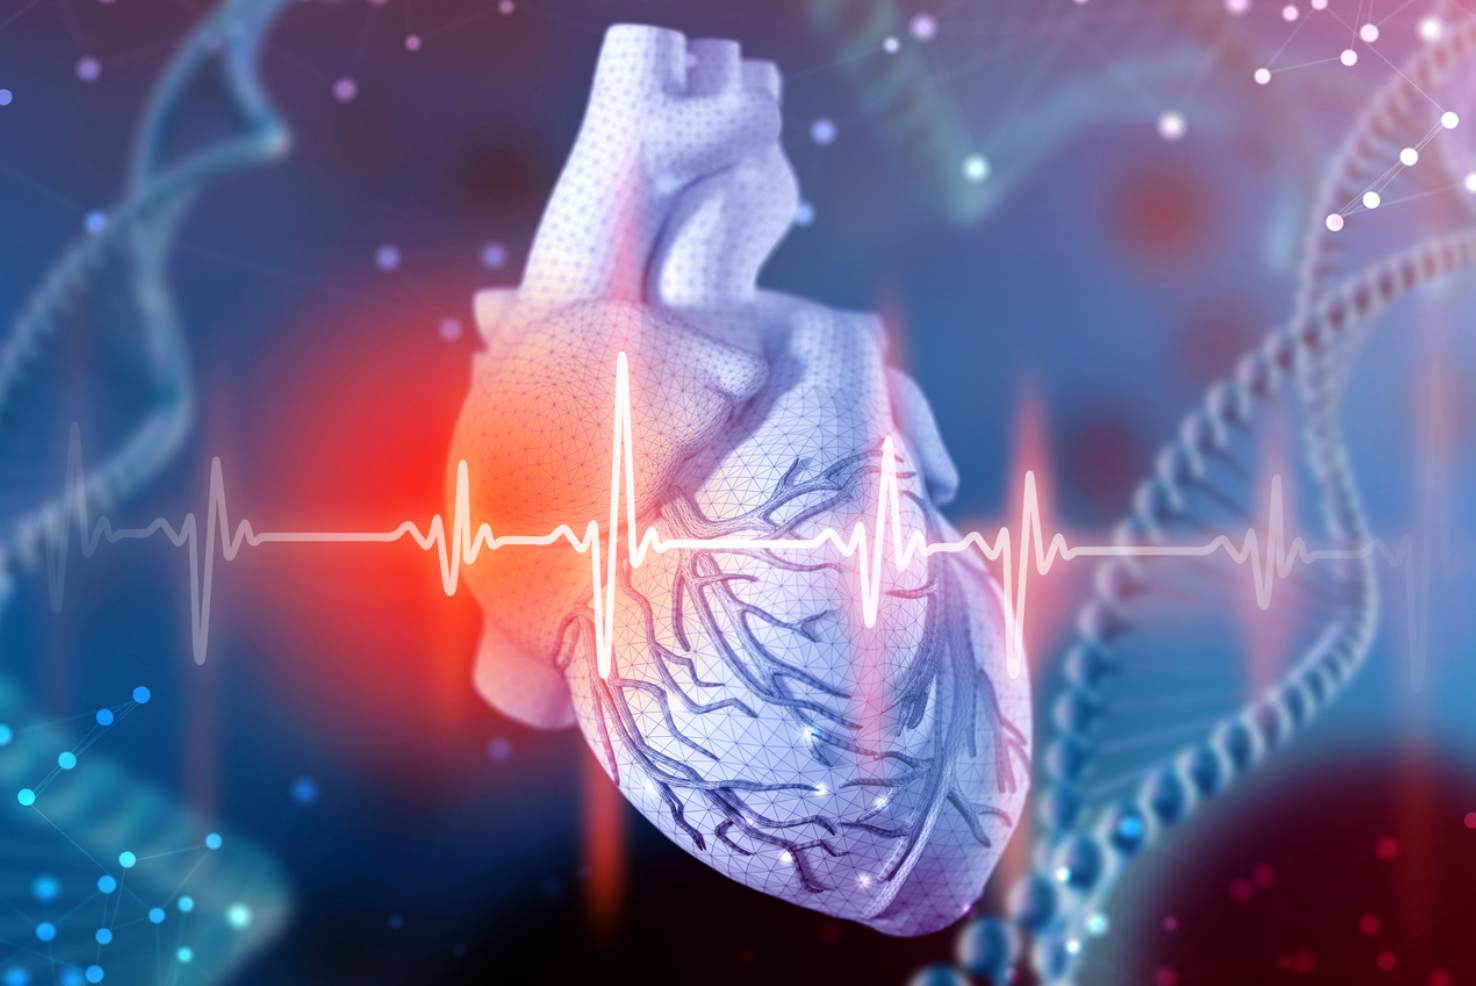 Pharmacist Medication Insights: Empagliflozin (Jardiance) for Heart Failure